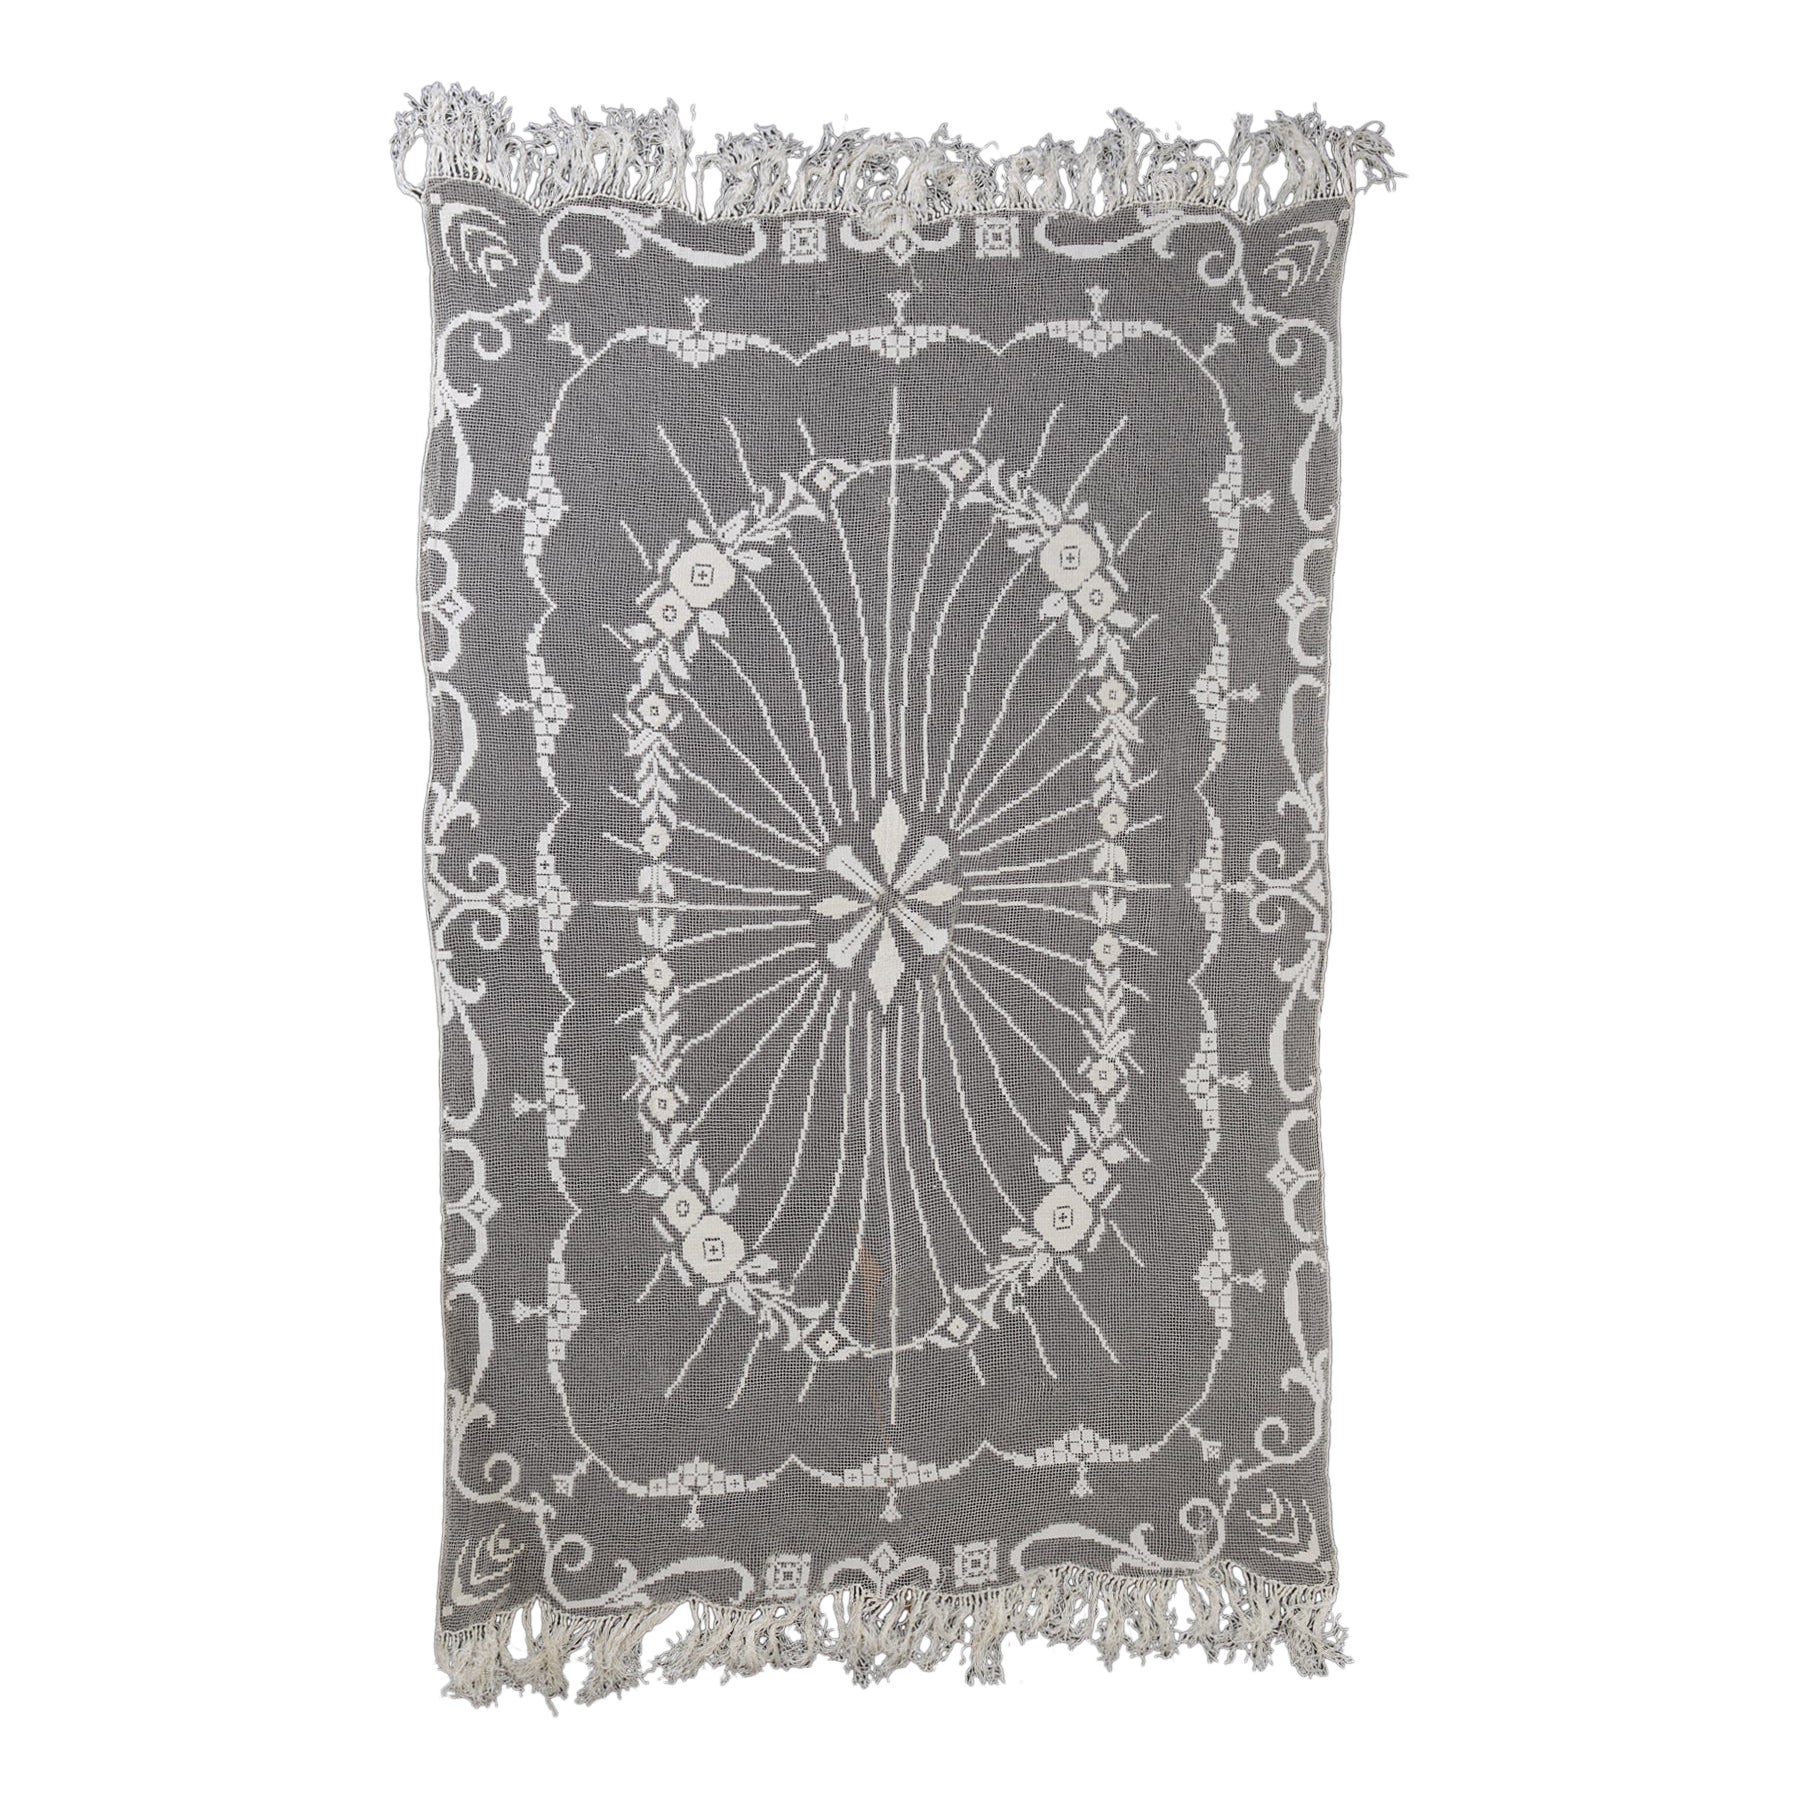 Tablecloth or Bedspread